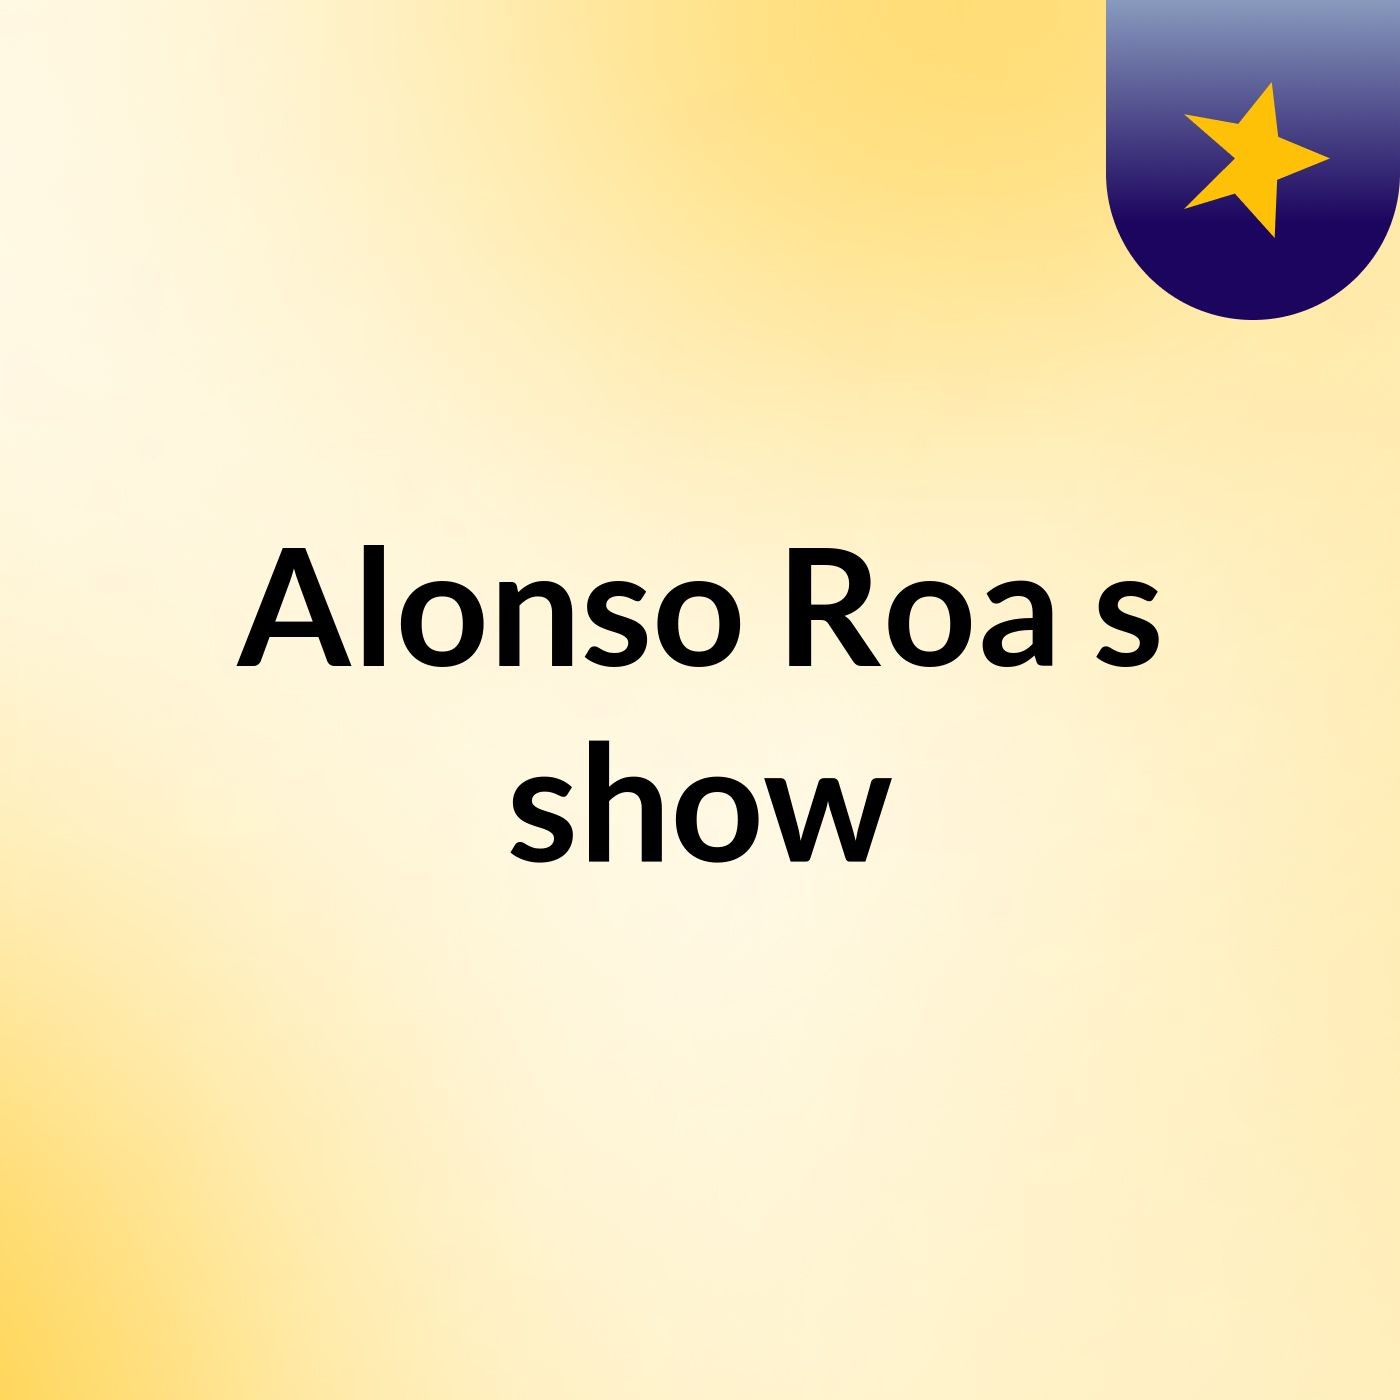 Alonso Roa's show